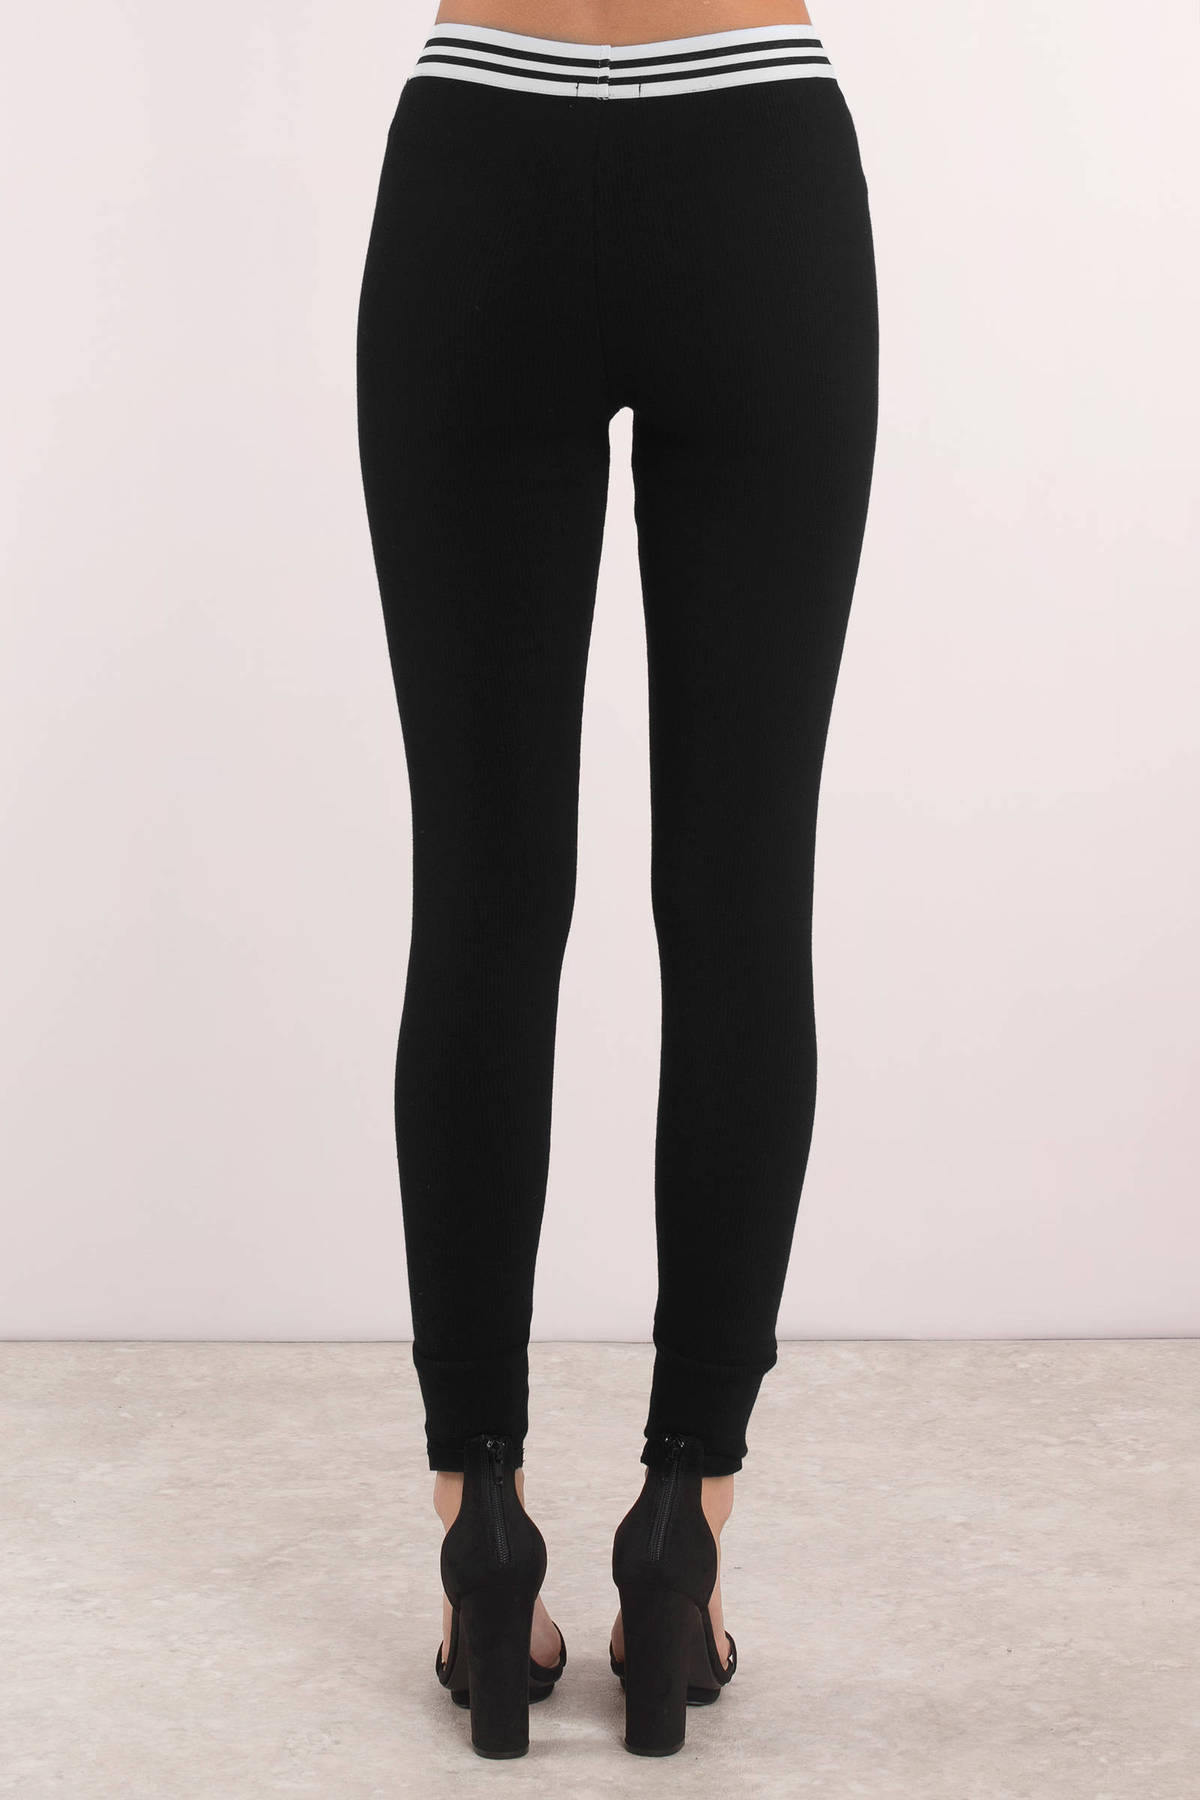 Cute Black Leggings - Stripe Detail - Black Leggings - $15 | Tobi US